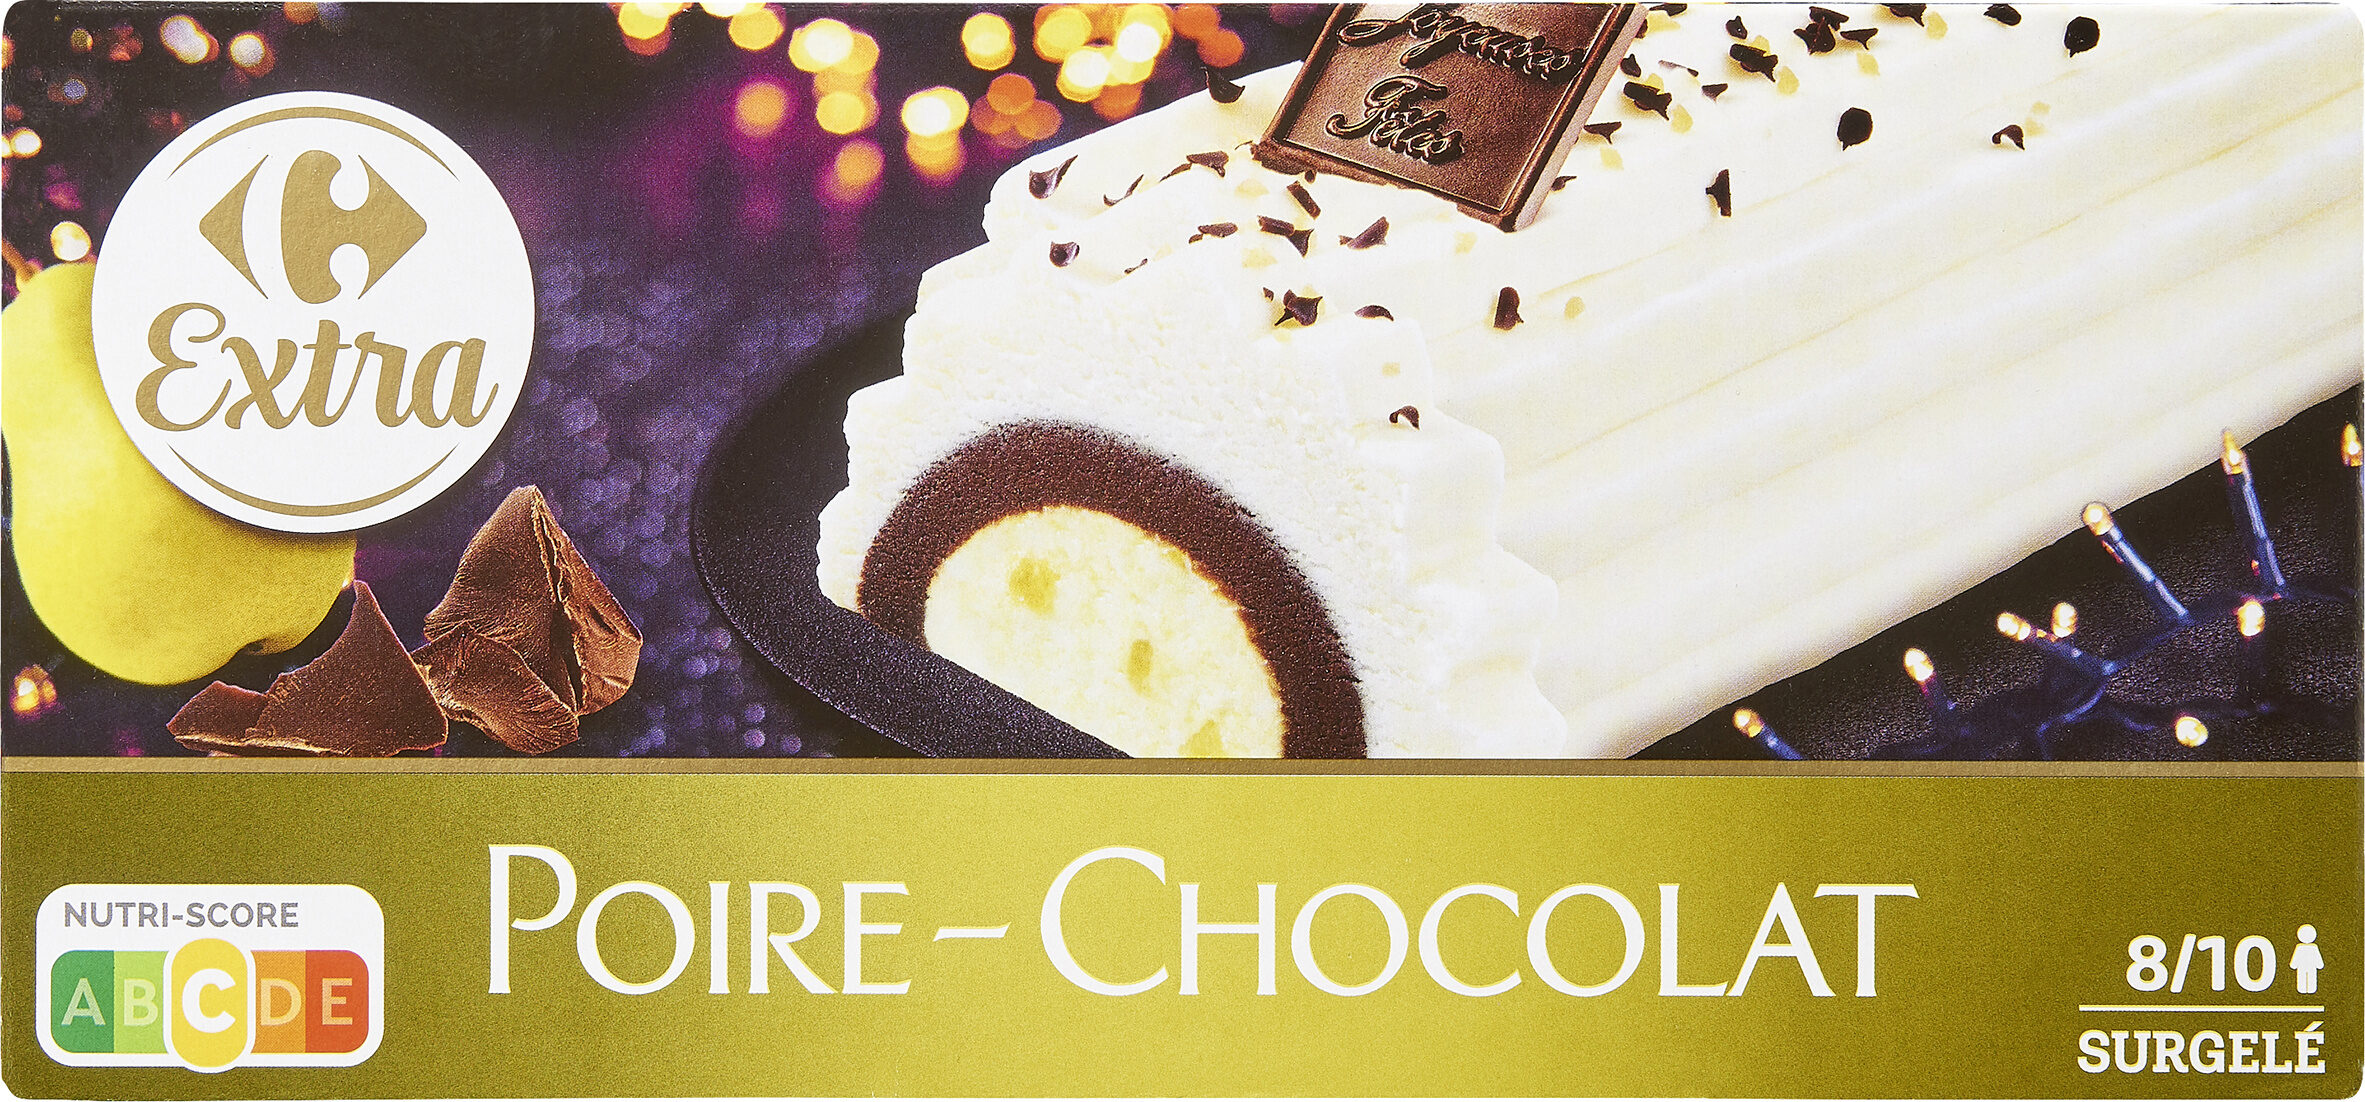 Poire - Chocolat - Product - fr